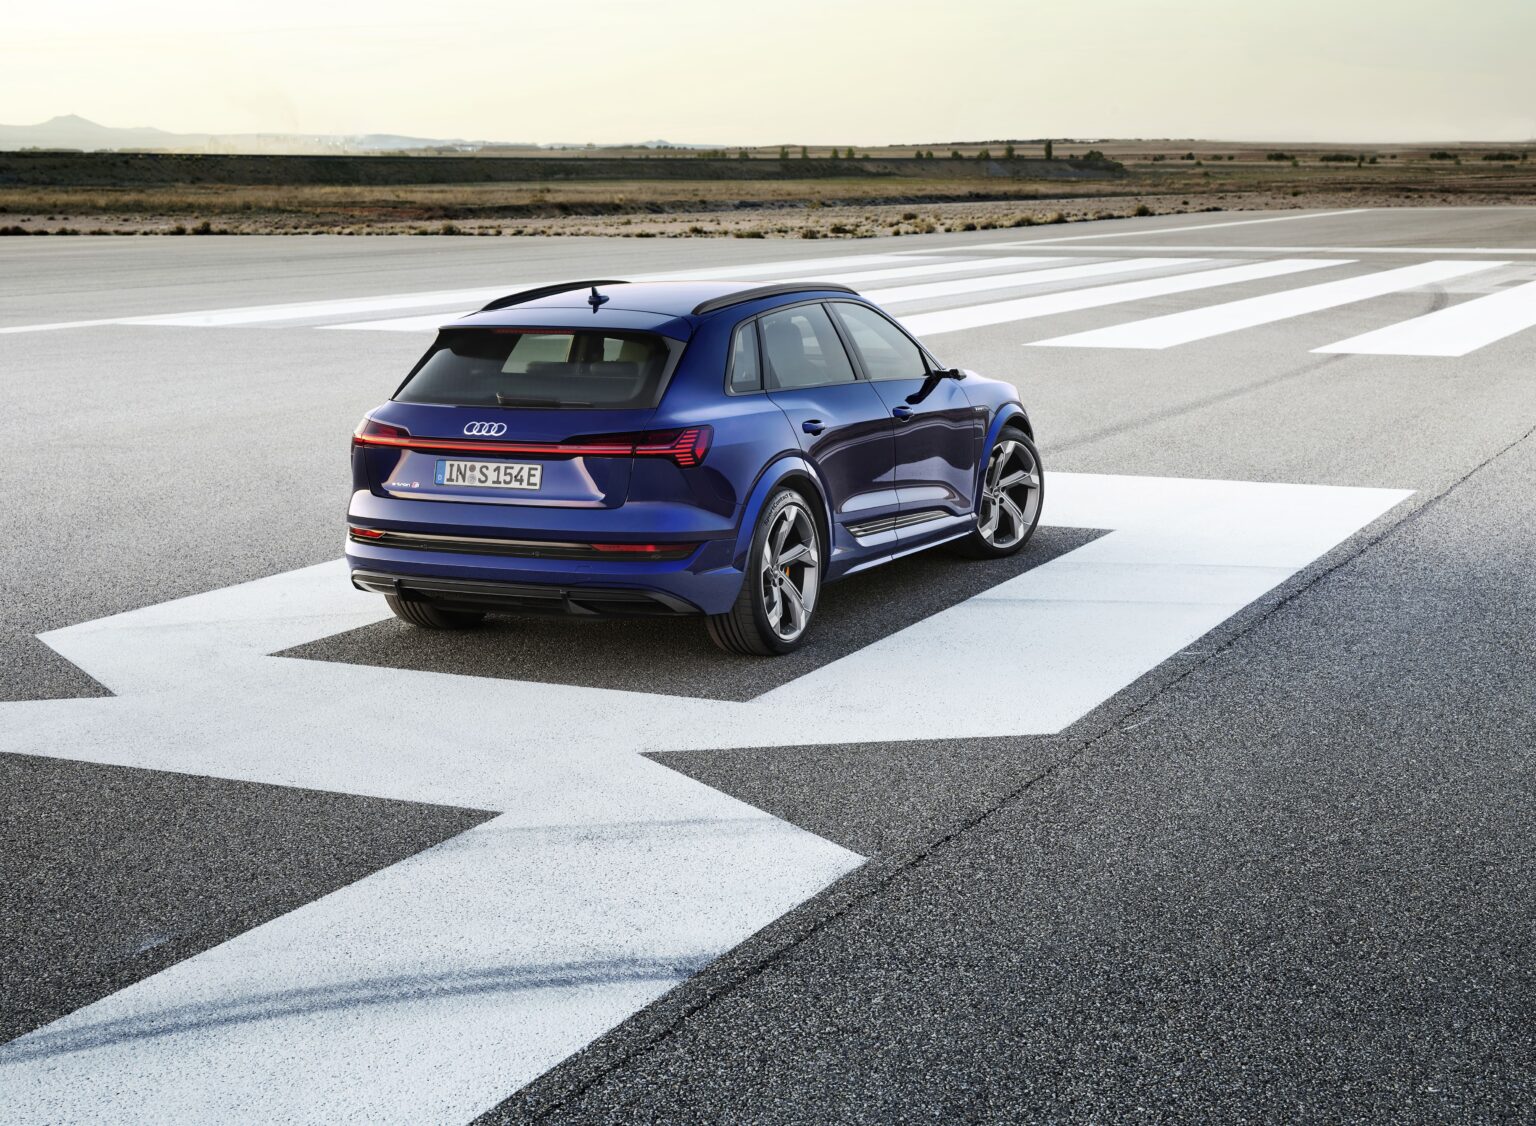 2023 Audi e-tron Exterior Image 16